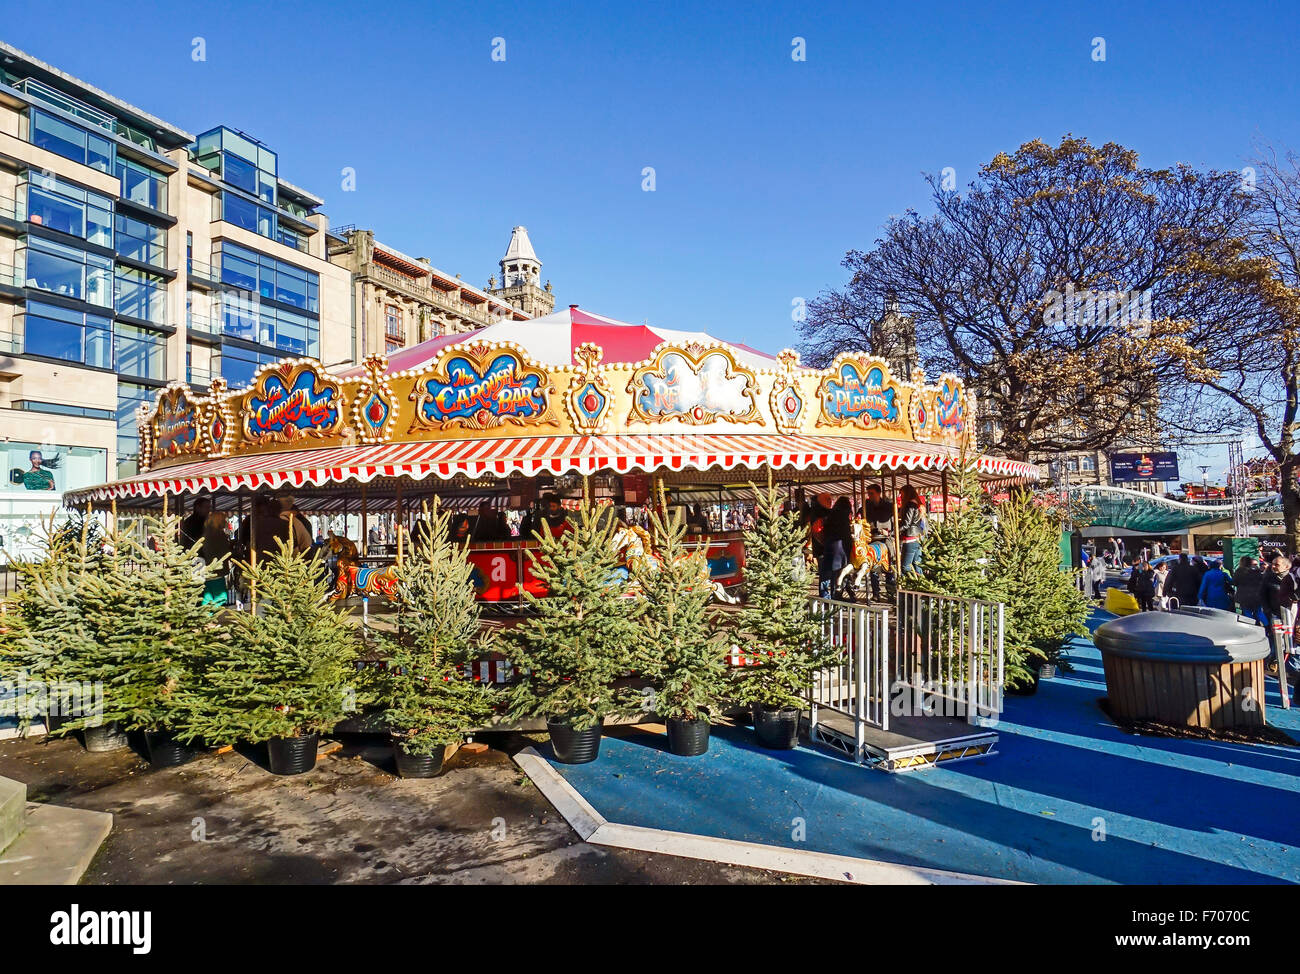 Edinburgh Christmas market 2015 with the Carousel Bar Stock Photo